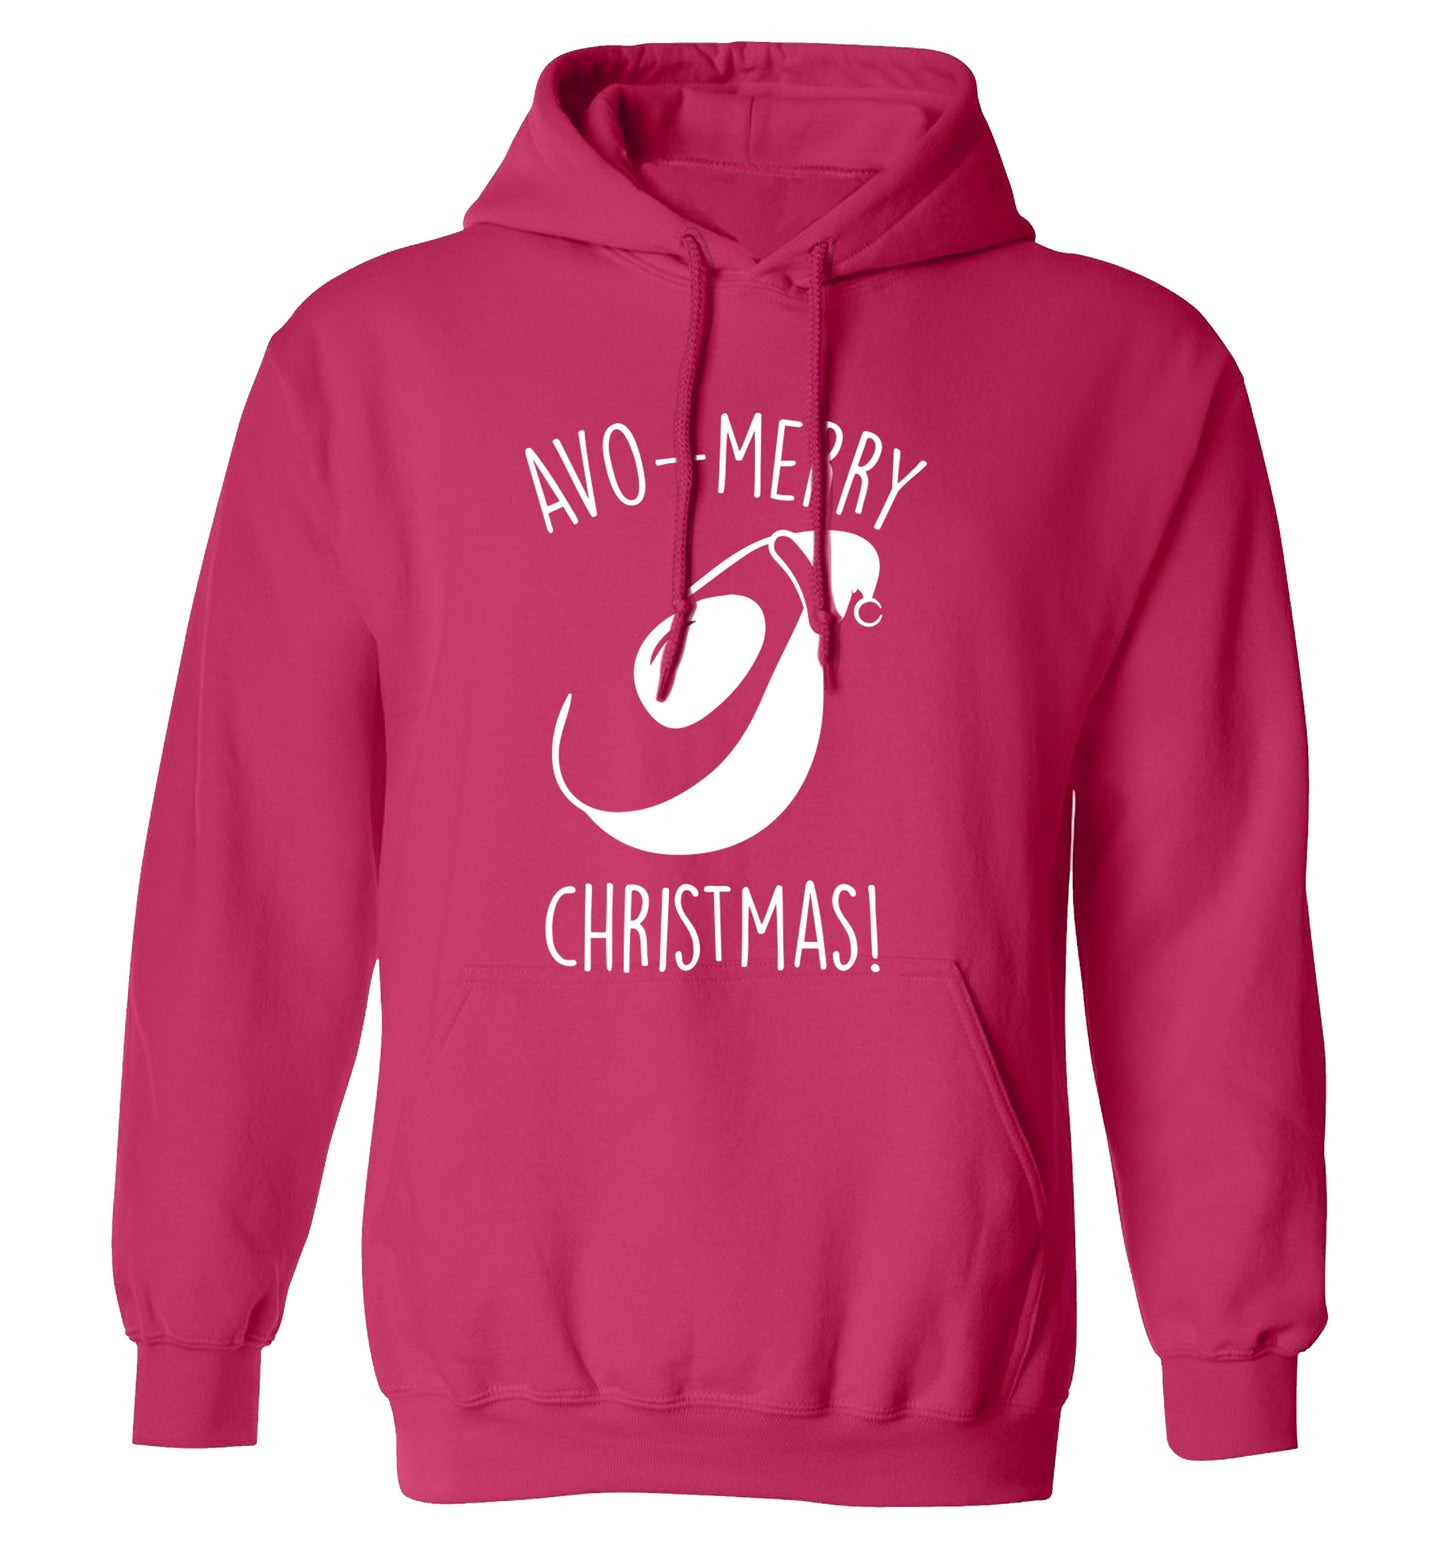 Avo-Merry Christmas adults unisex pink hoodie 2XL